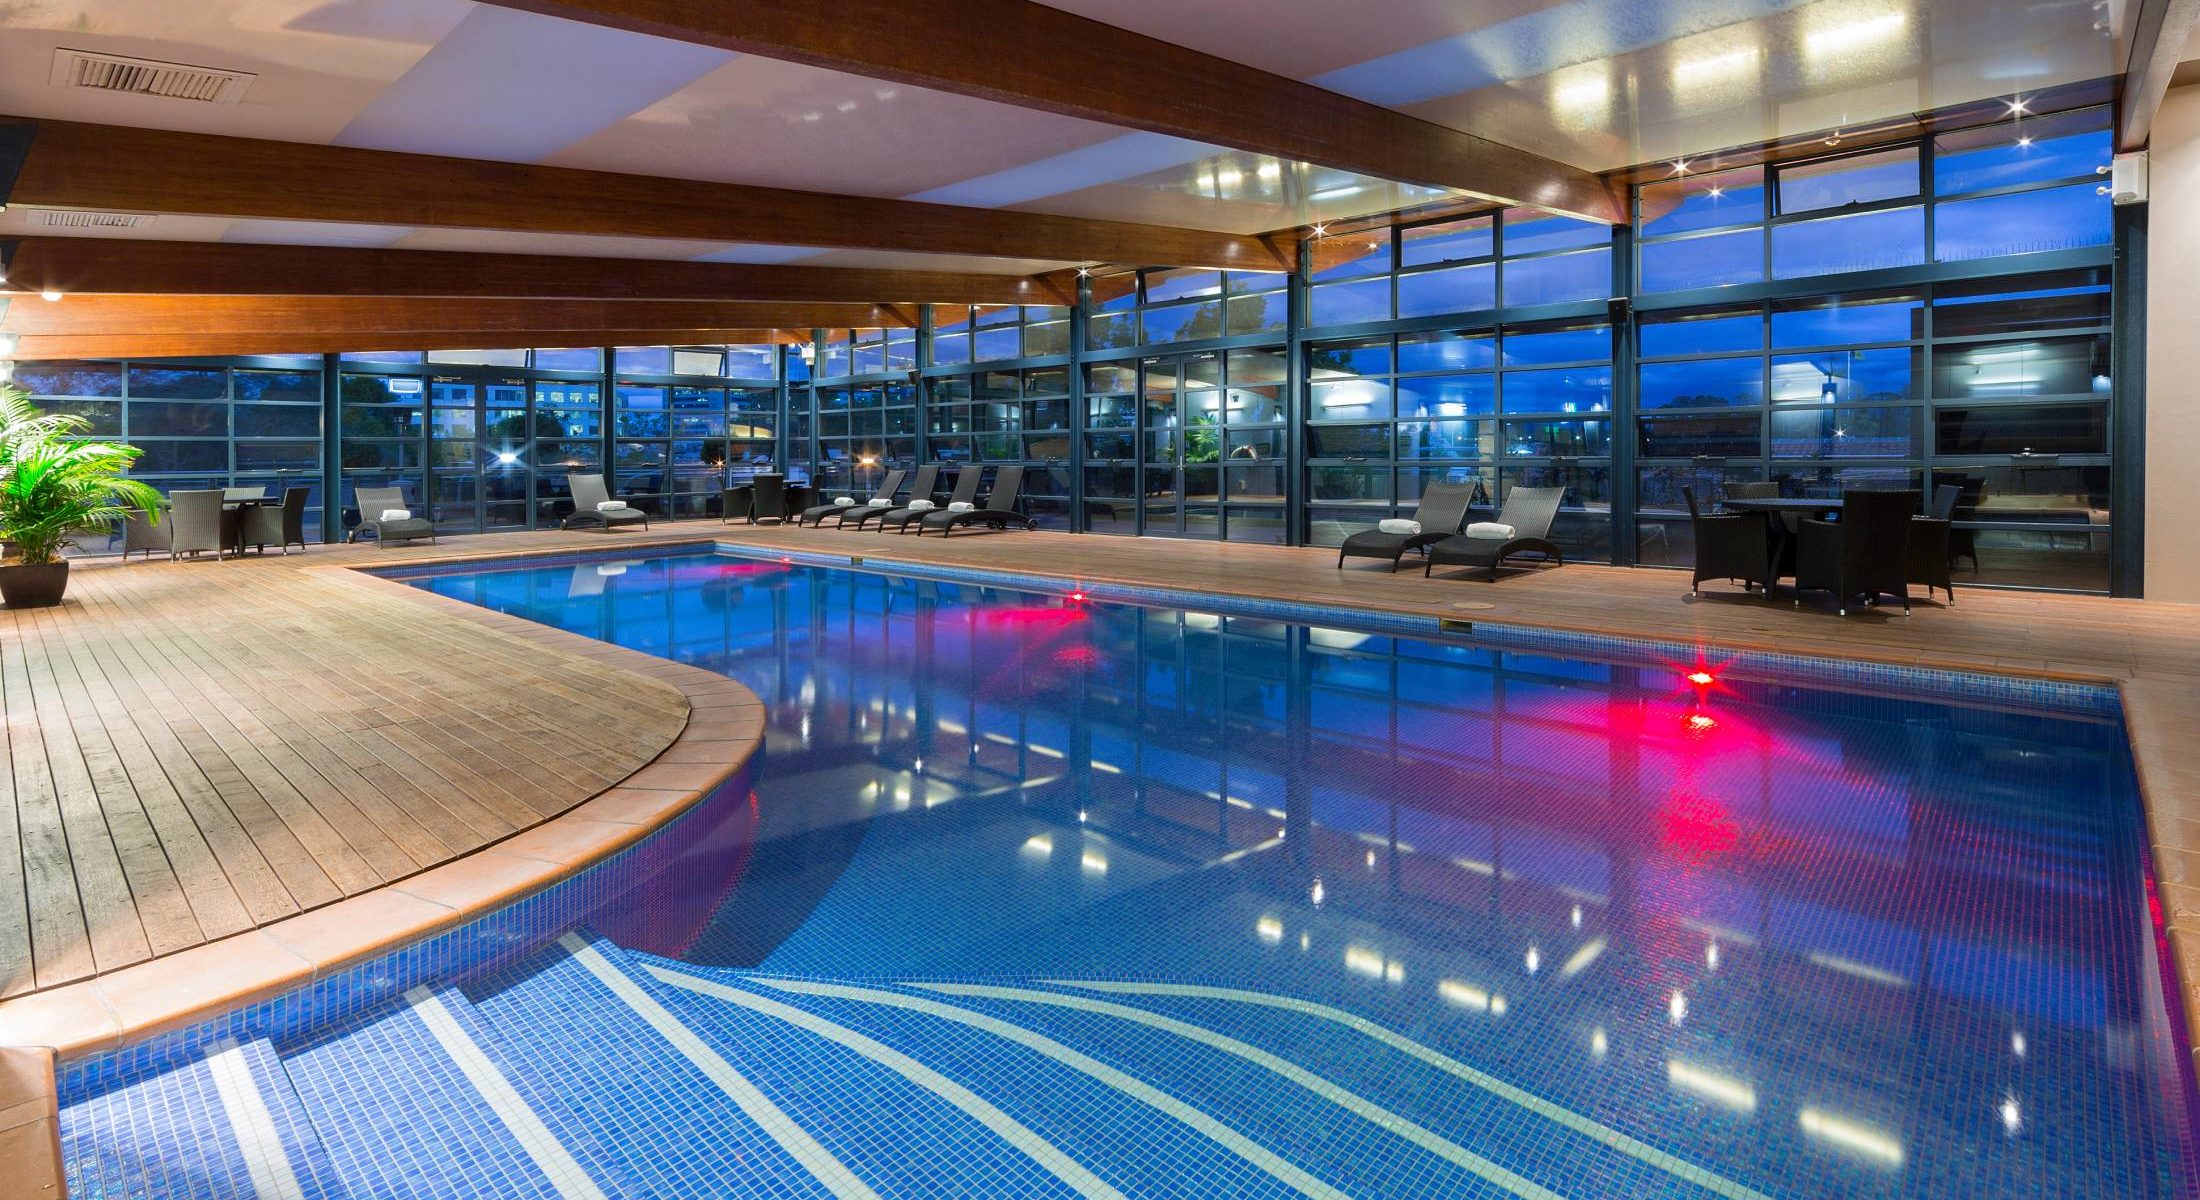 Novotel Canberra Leisure Facilities - Indoor heated pool